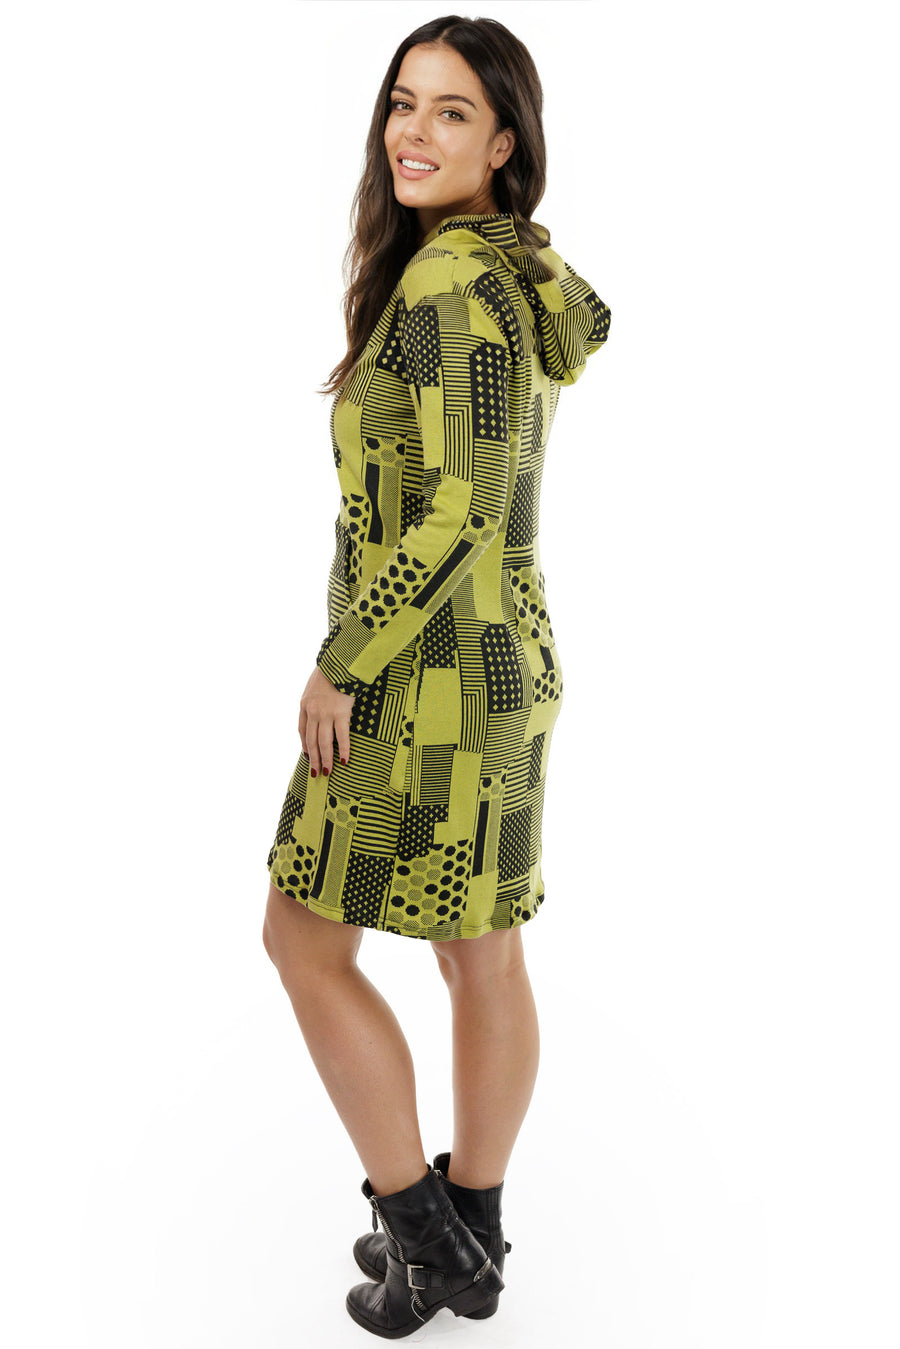 Green Geometric Game Hoodie Dress